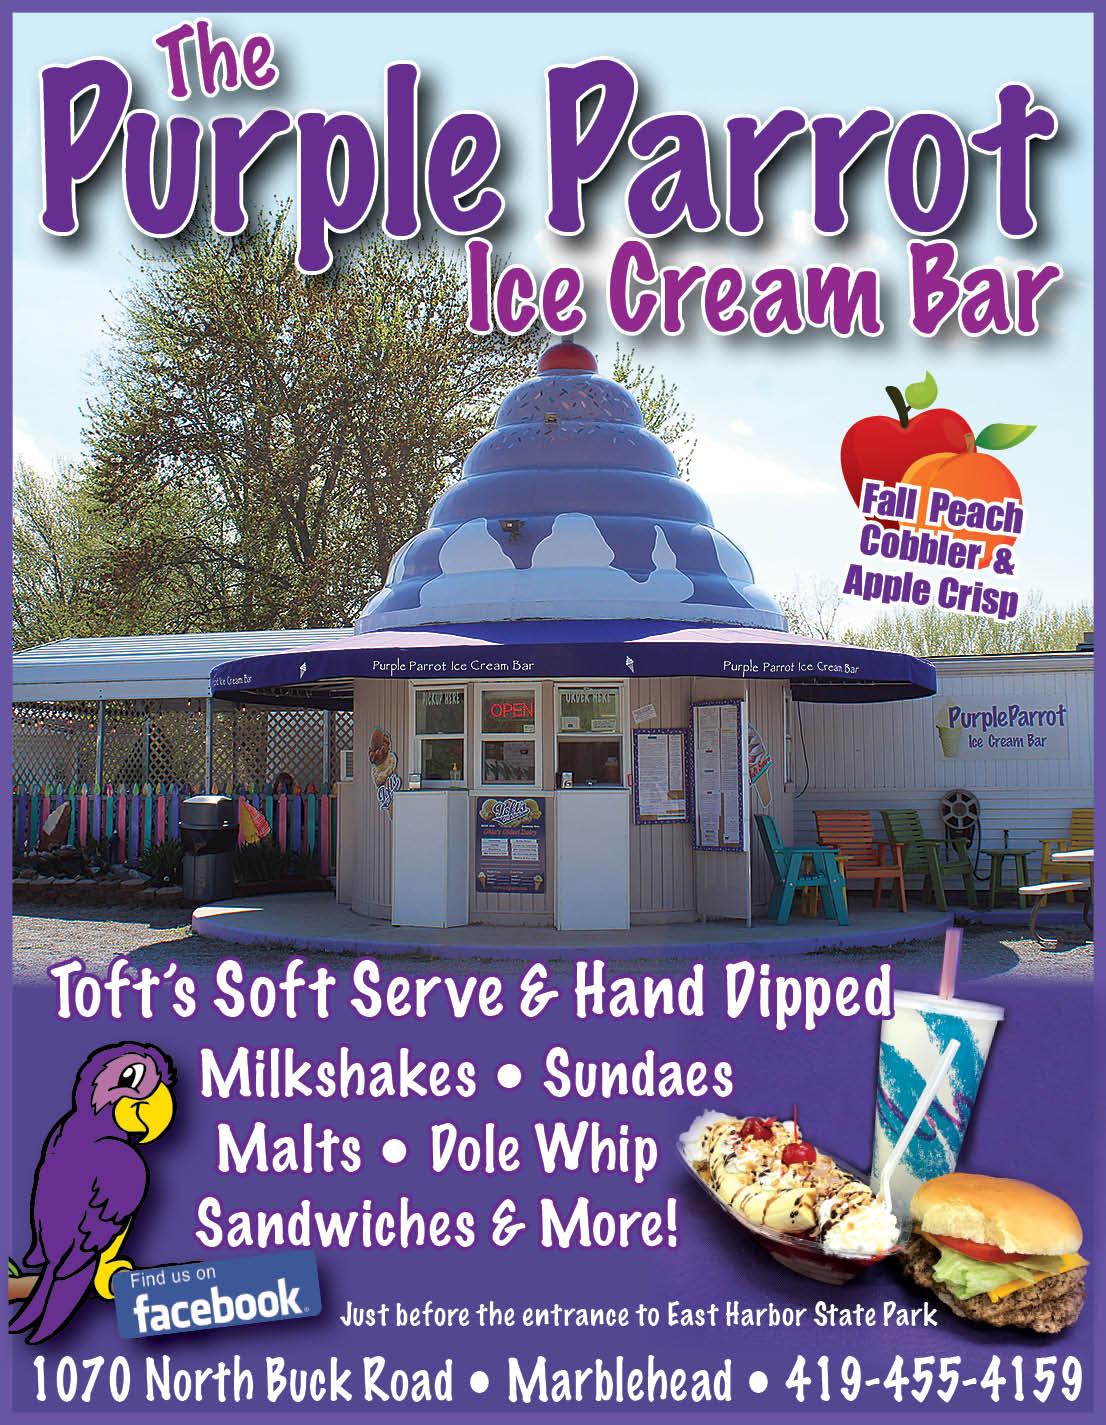 The Purple Parrot Ice Cream Bar